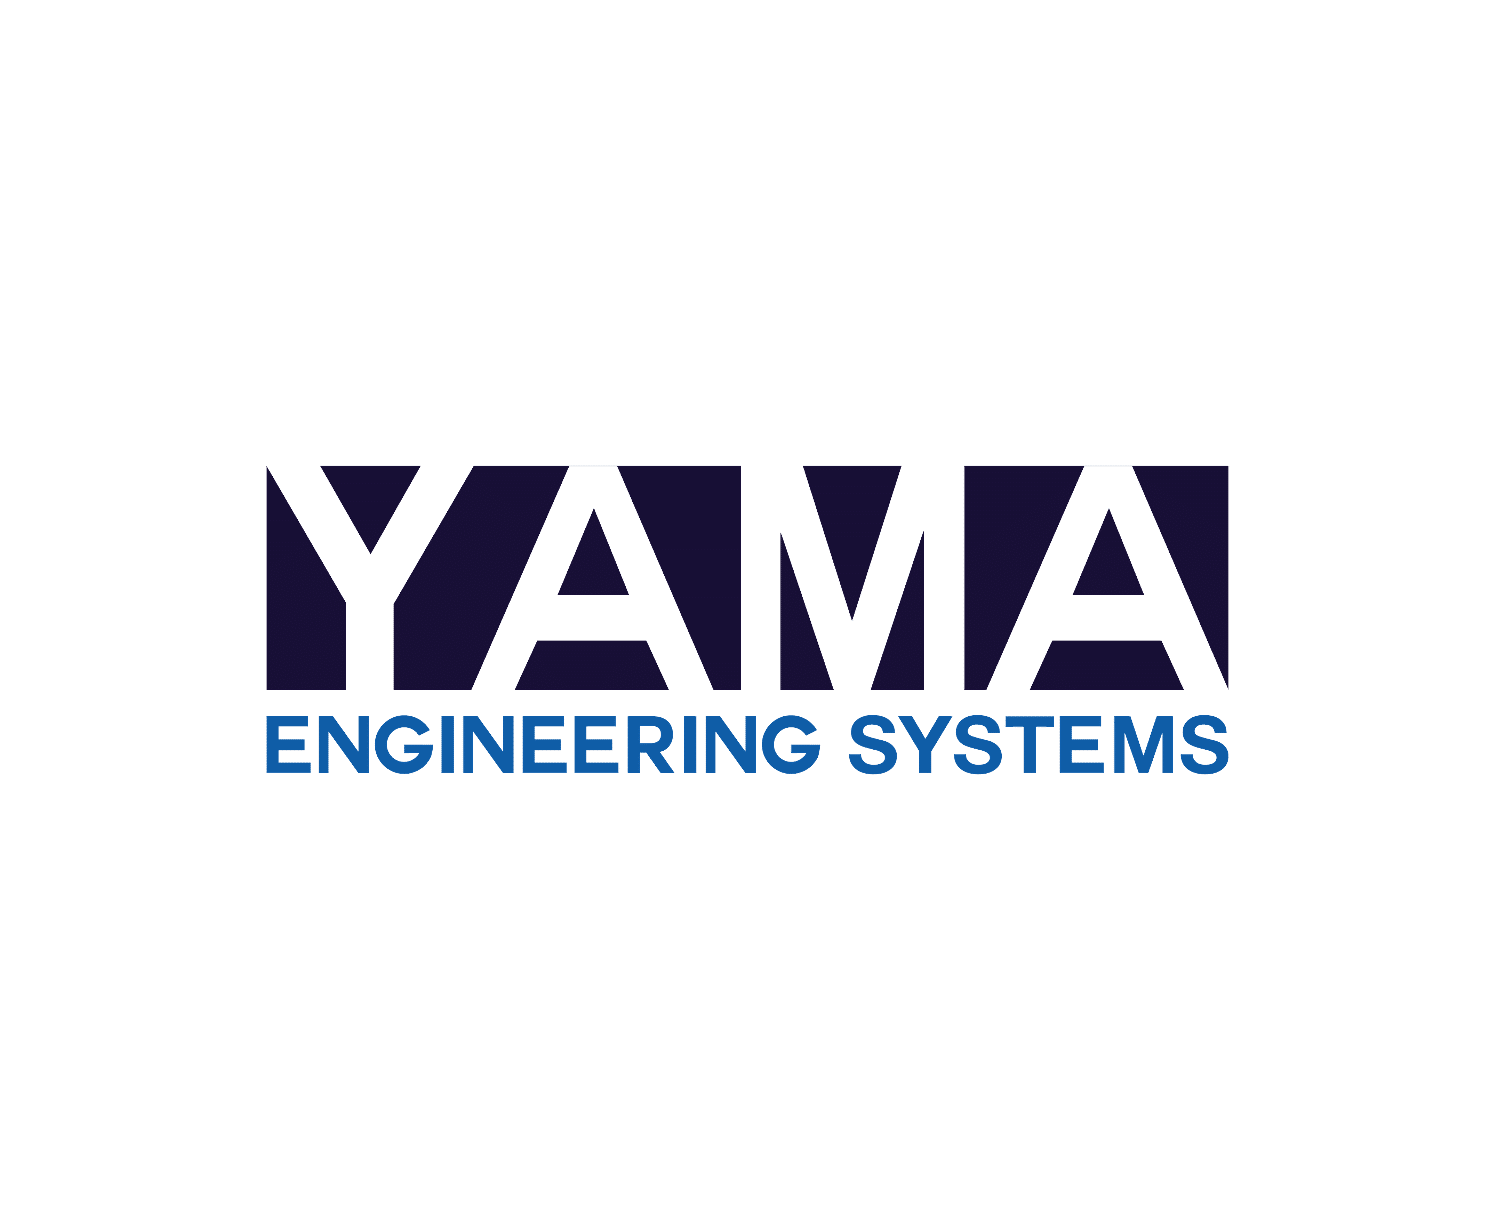 Yama Engineering Systems